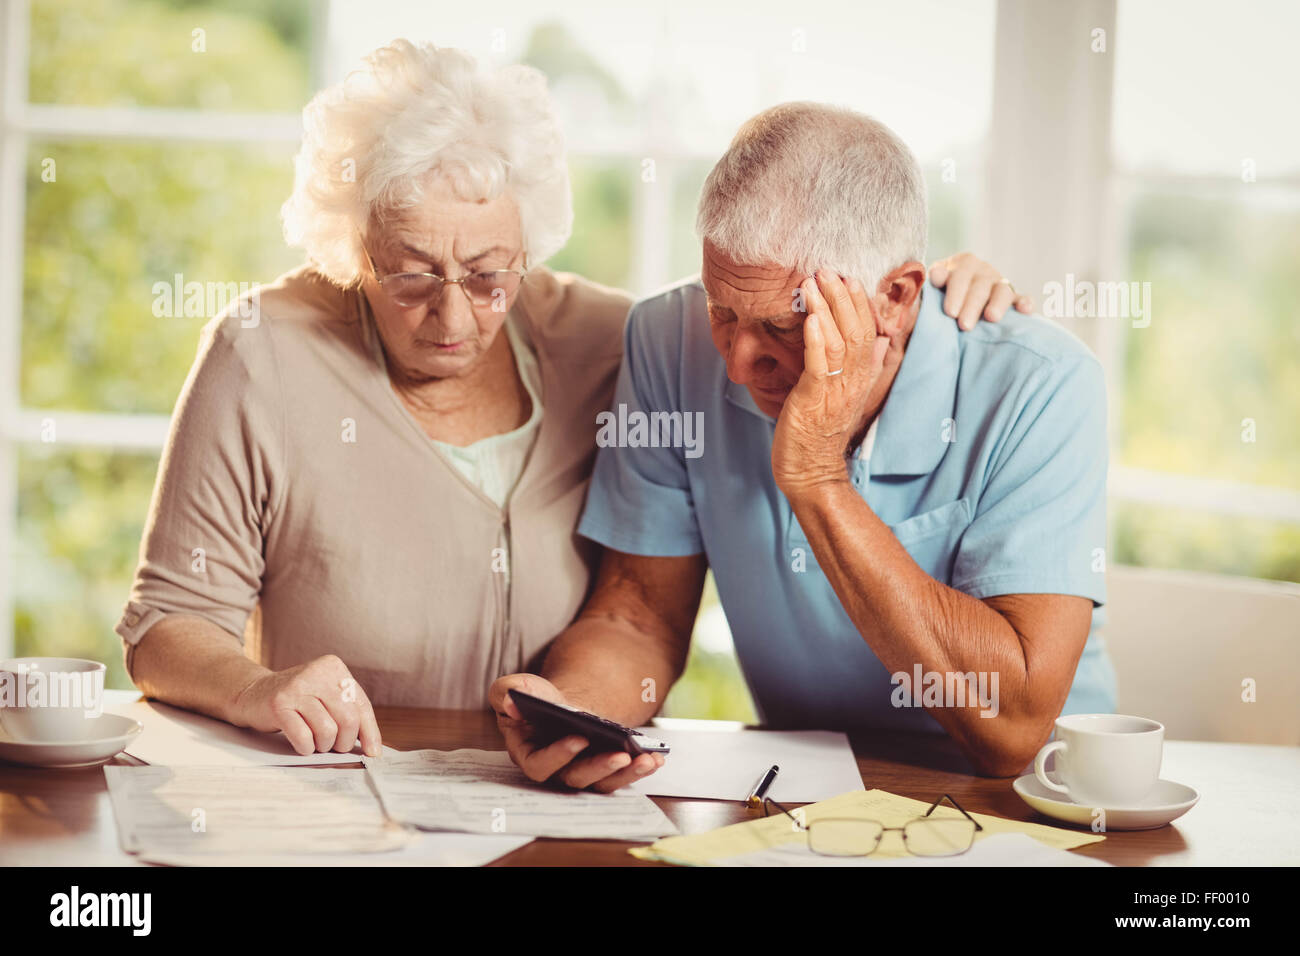 Senior couple counting bills Stock Photo